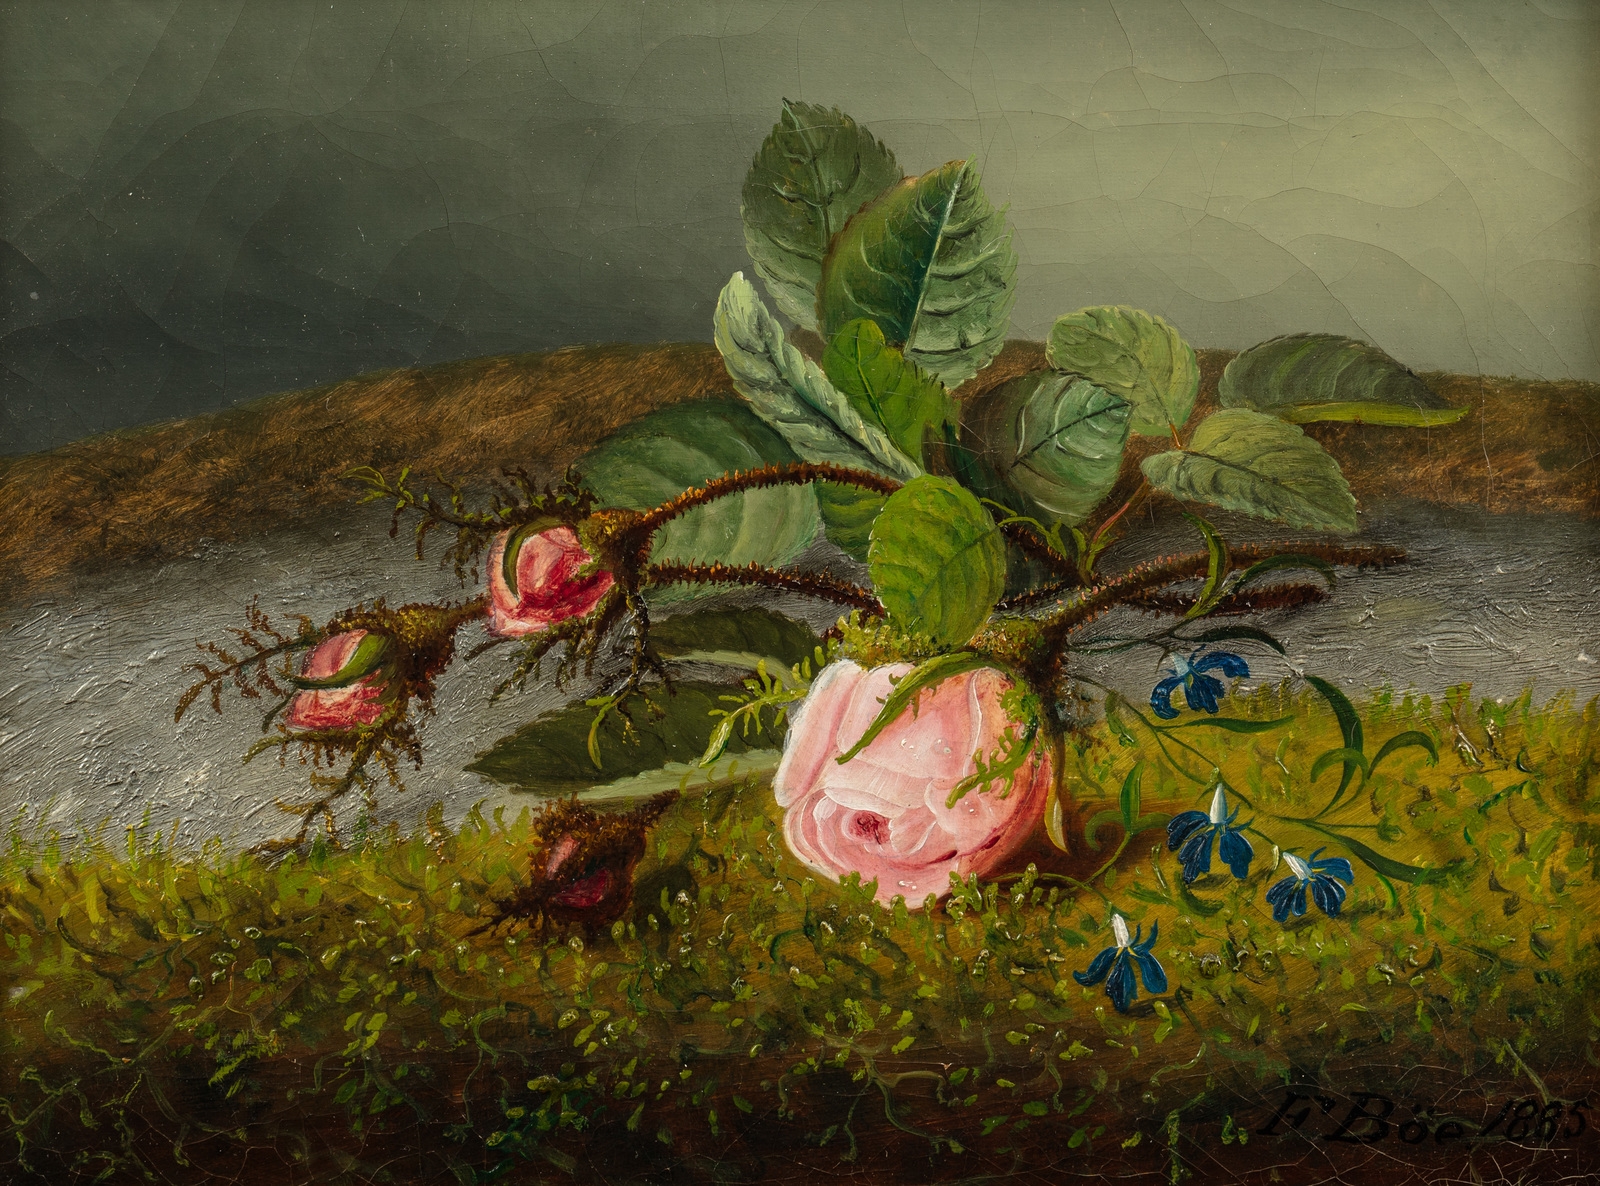 Artwork by Frants Diderik Bøe, "Roser", Made of oil on canvas